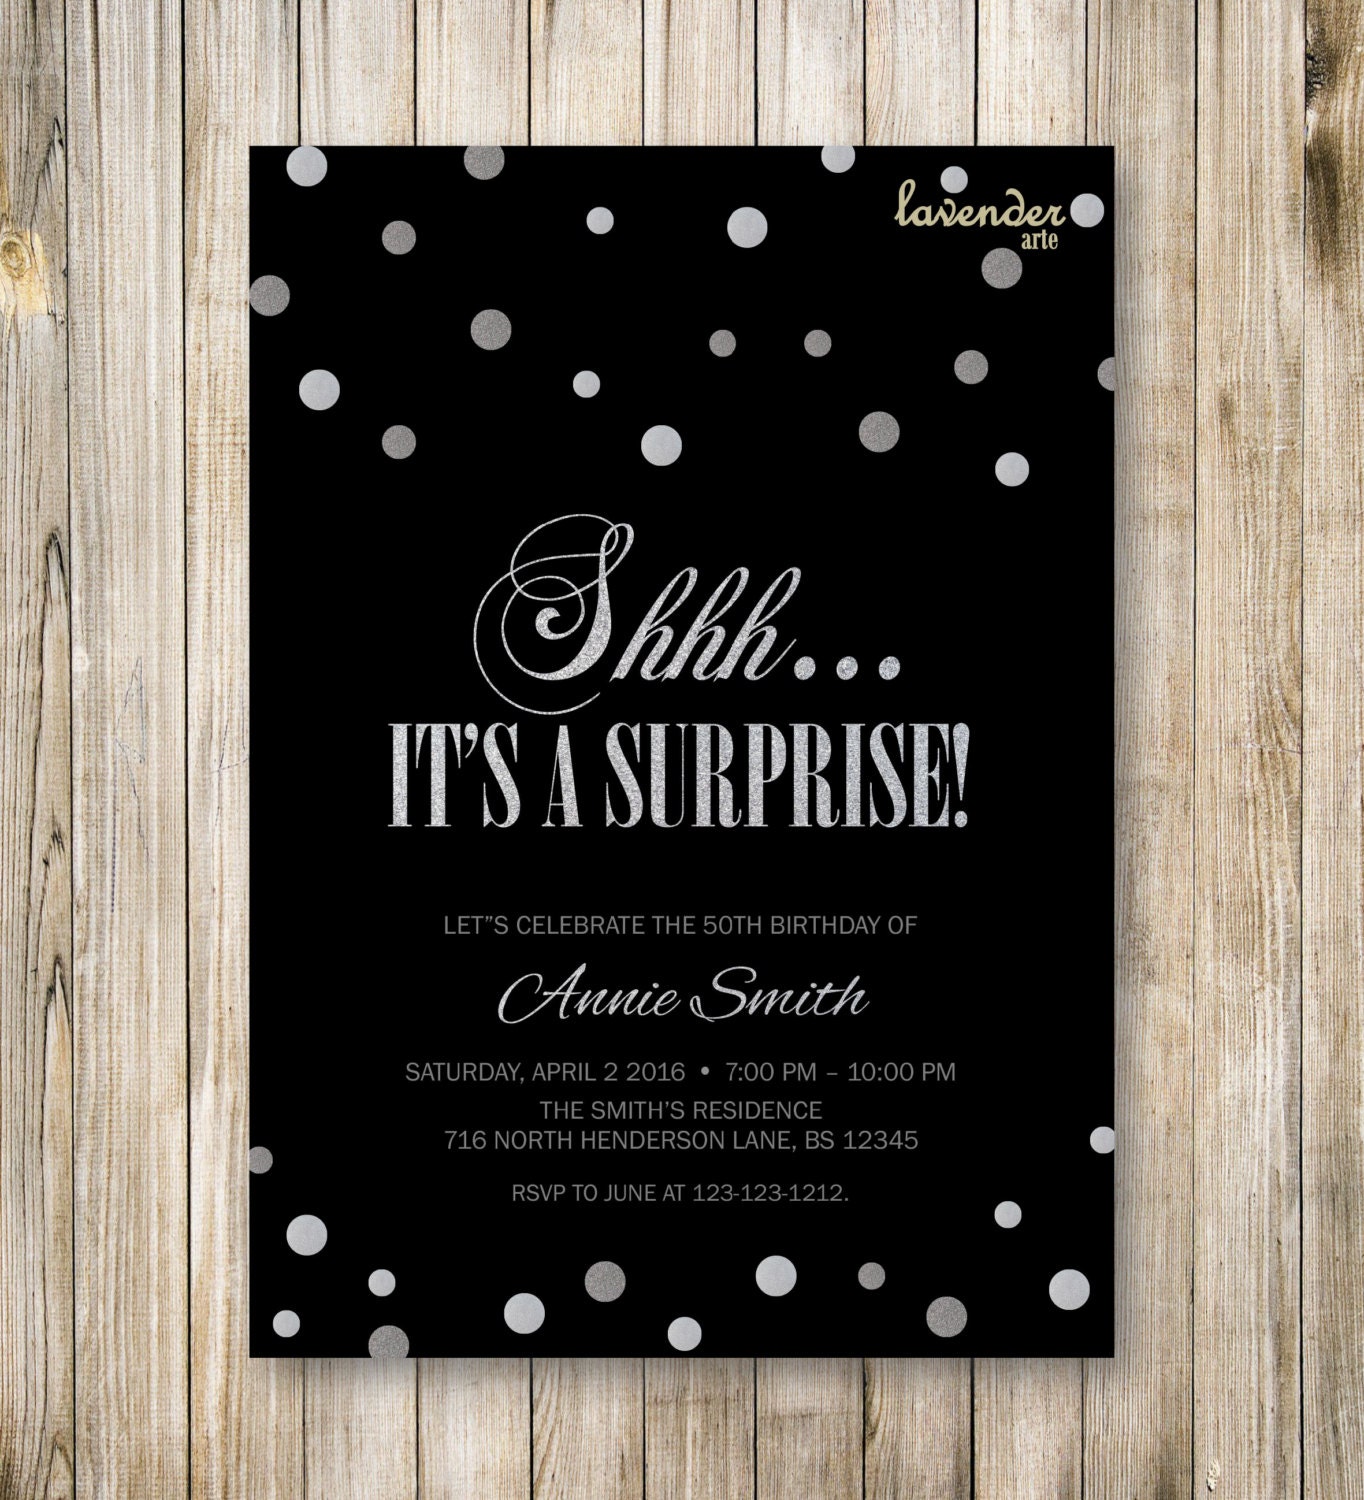 shhh-it-s-a-surprise-birthday-party-invitation-surprise